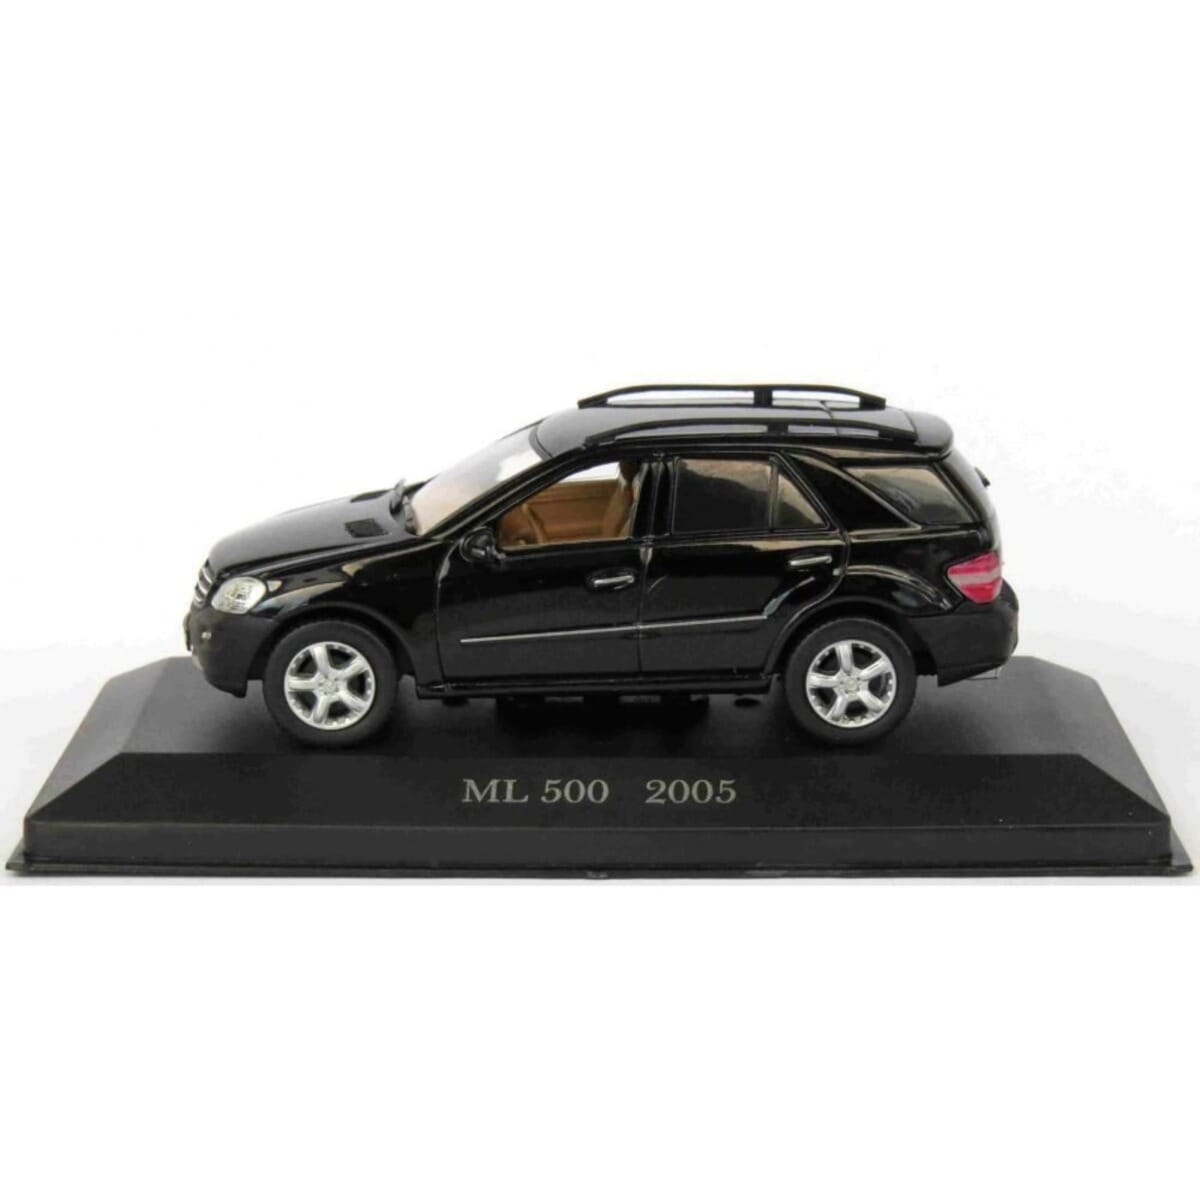 Mercedes Benz 220SE Coupe Diecast Model 1:43 scale Black